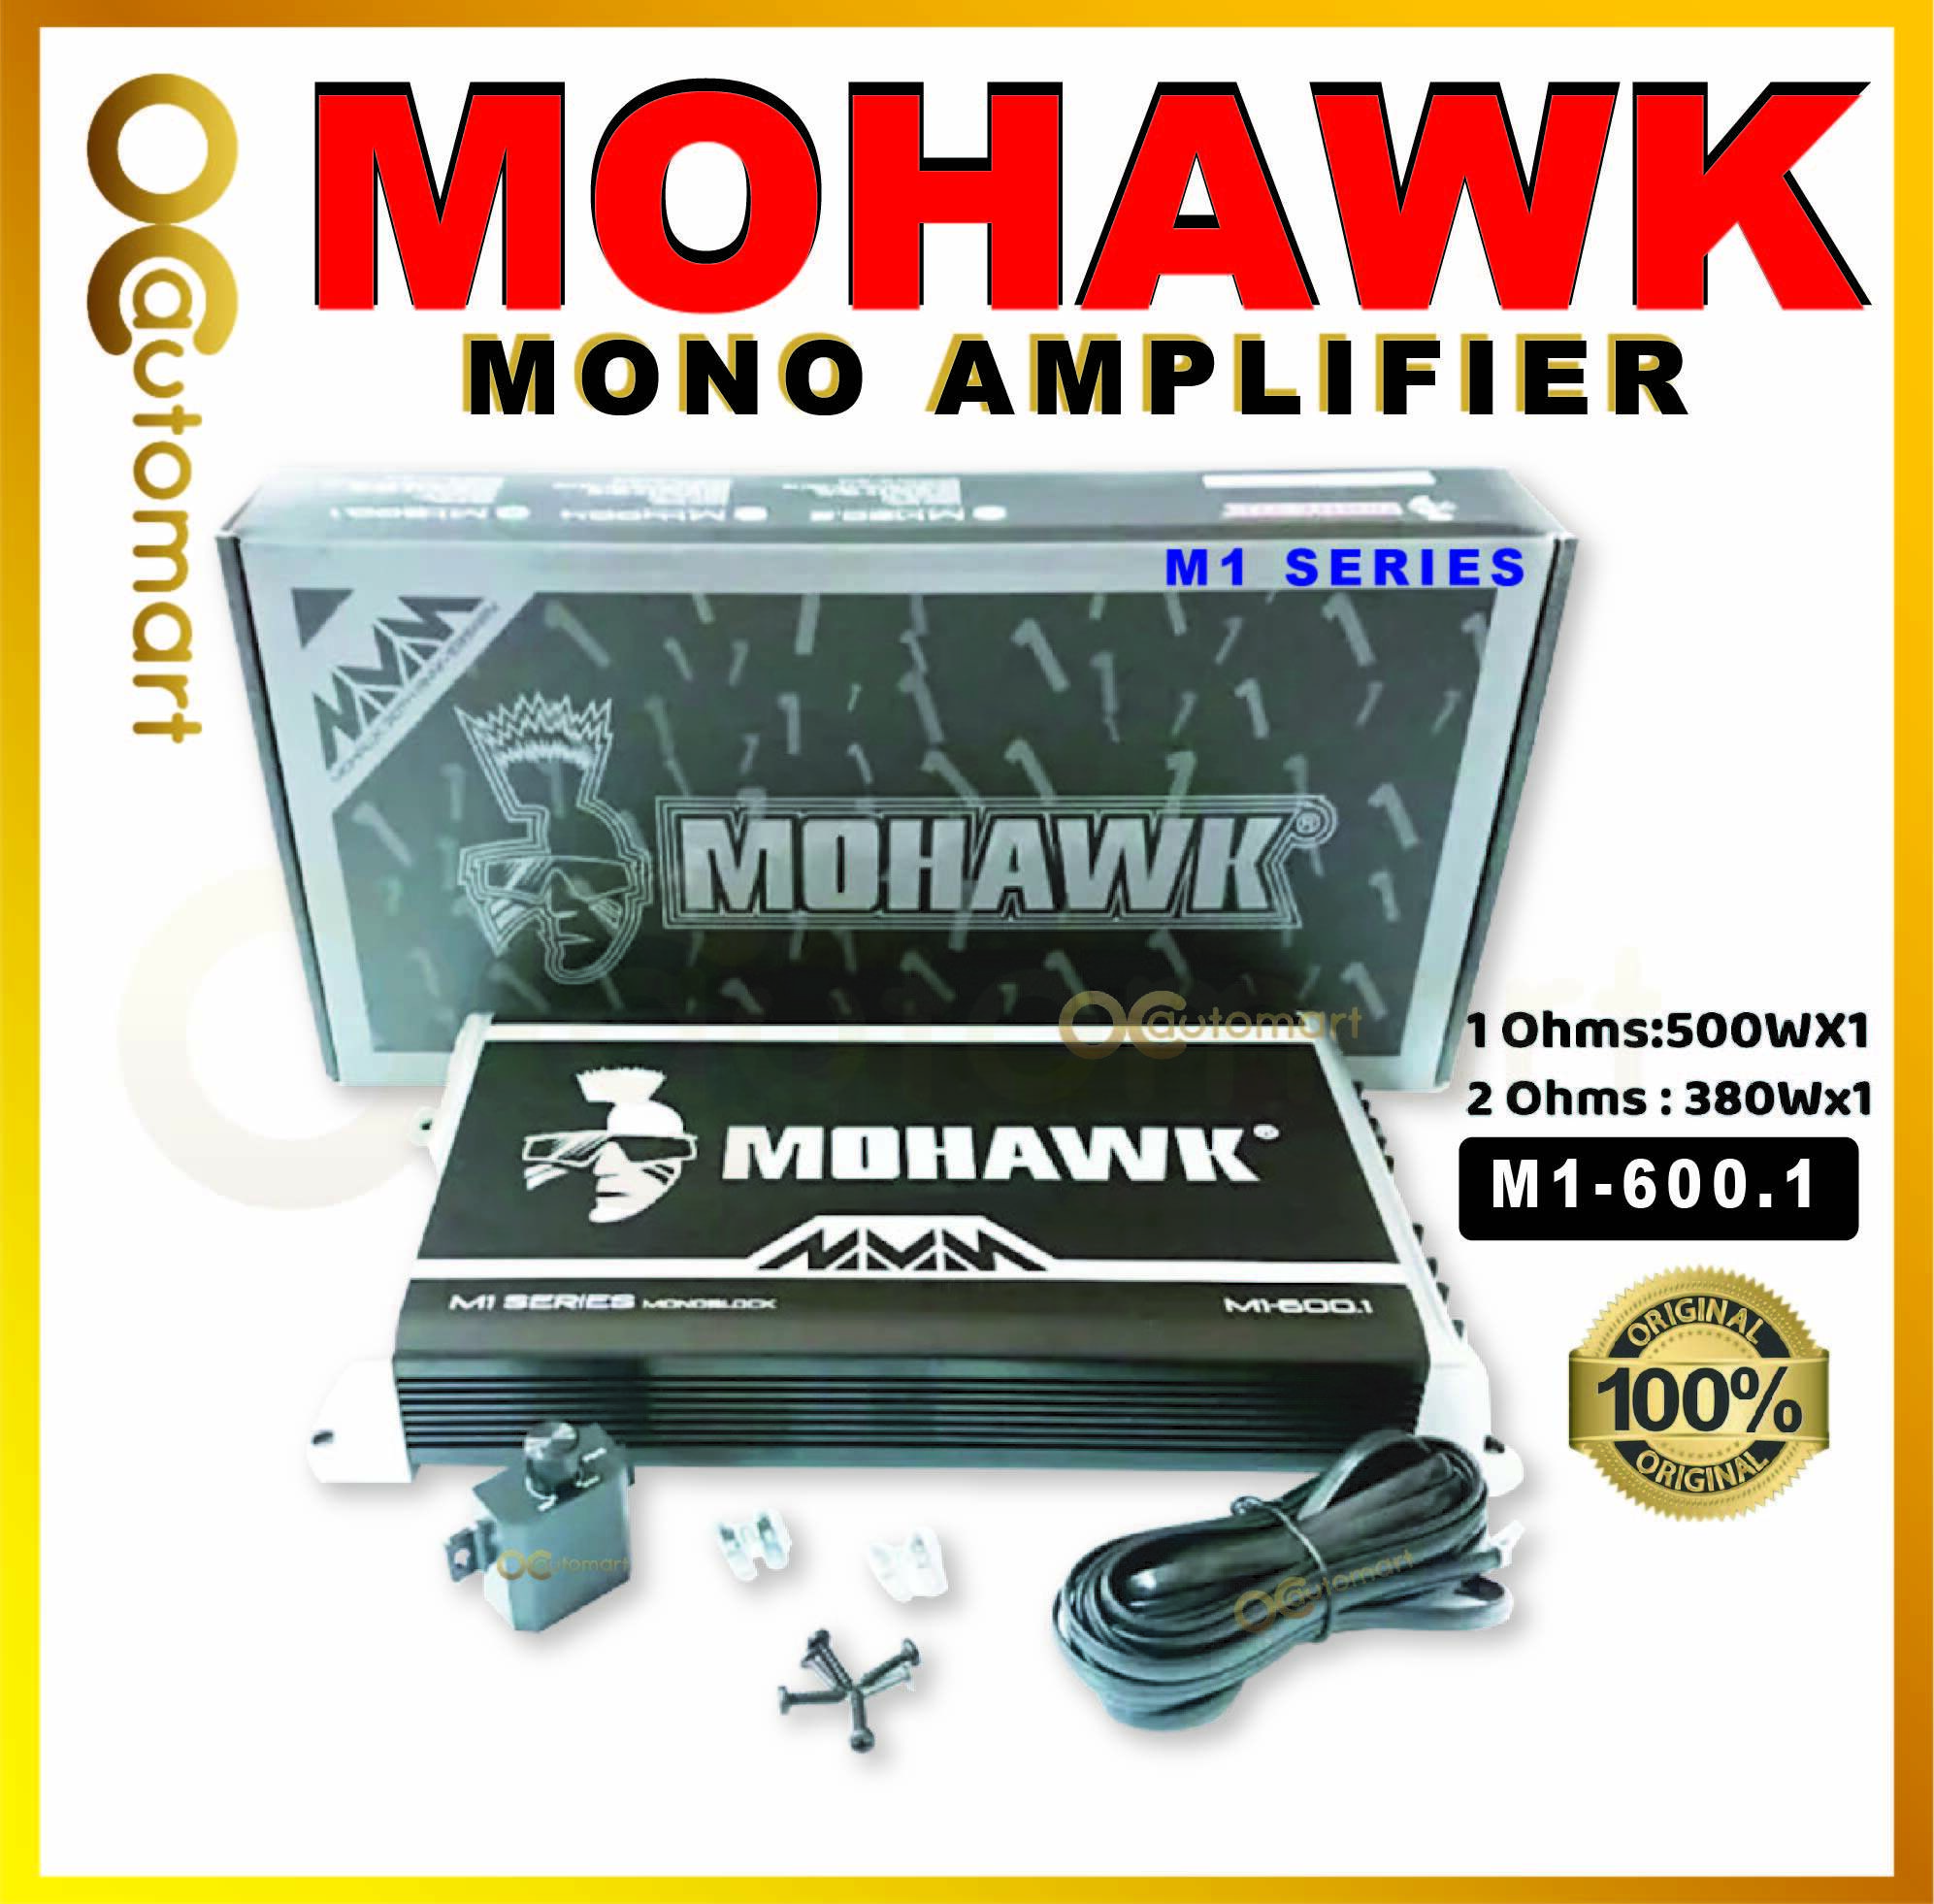 MOHAWK Car Audio M1 SERIES 500W MONO Amplifier - M1-600.1